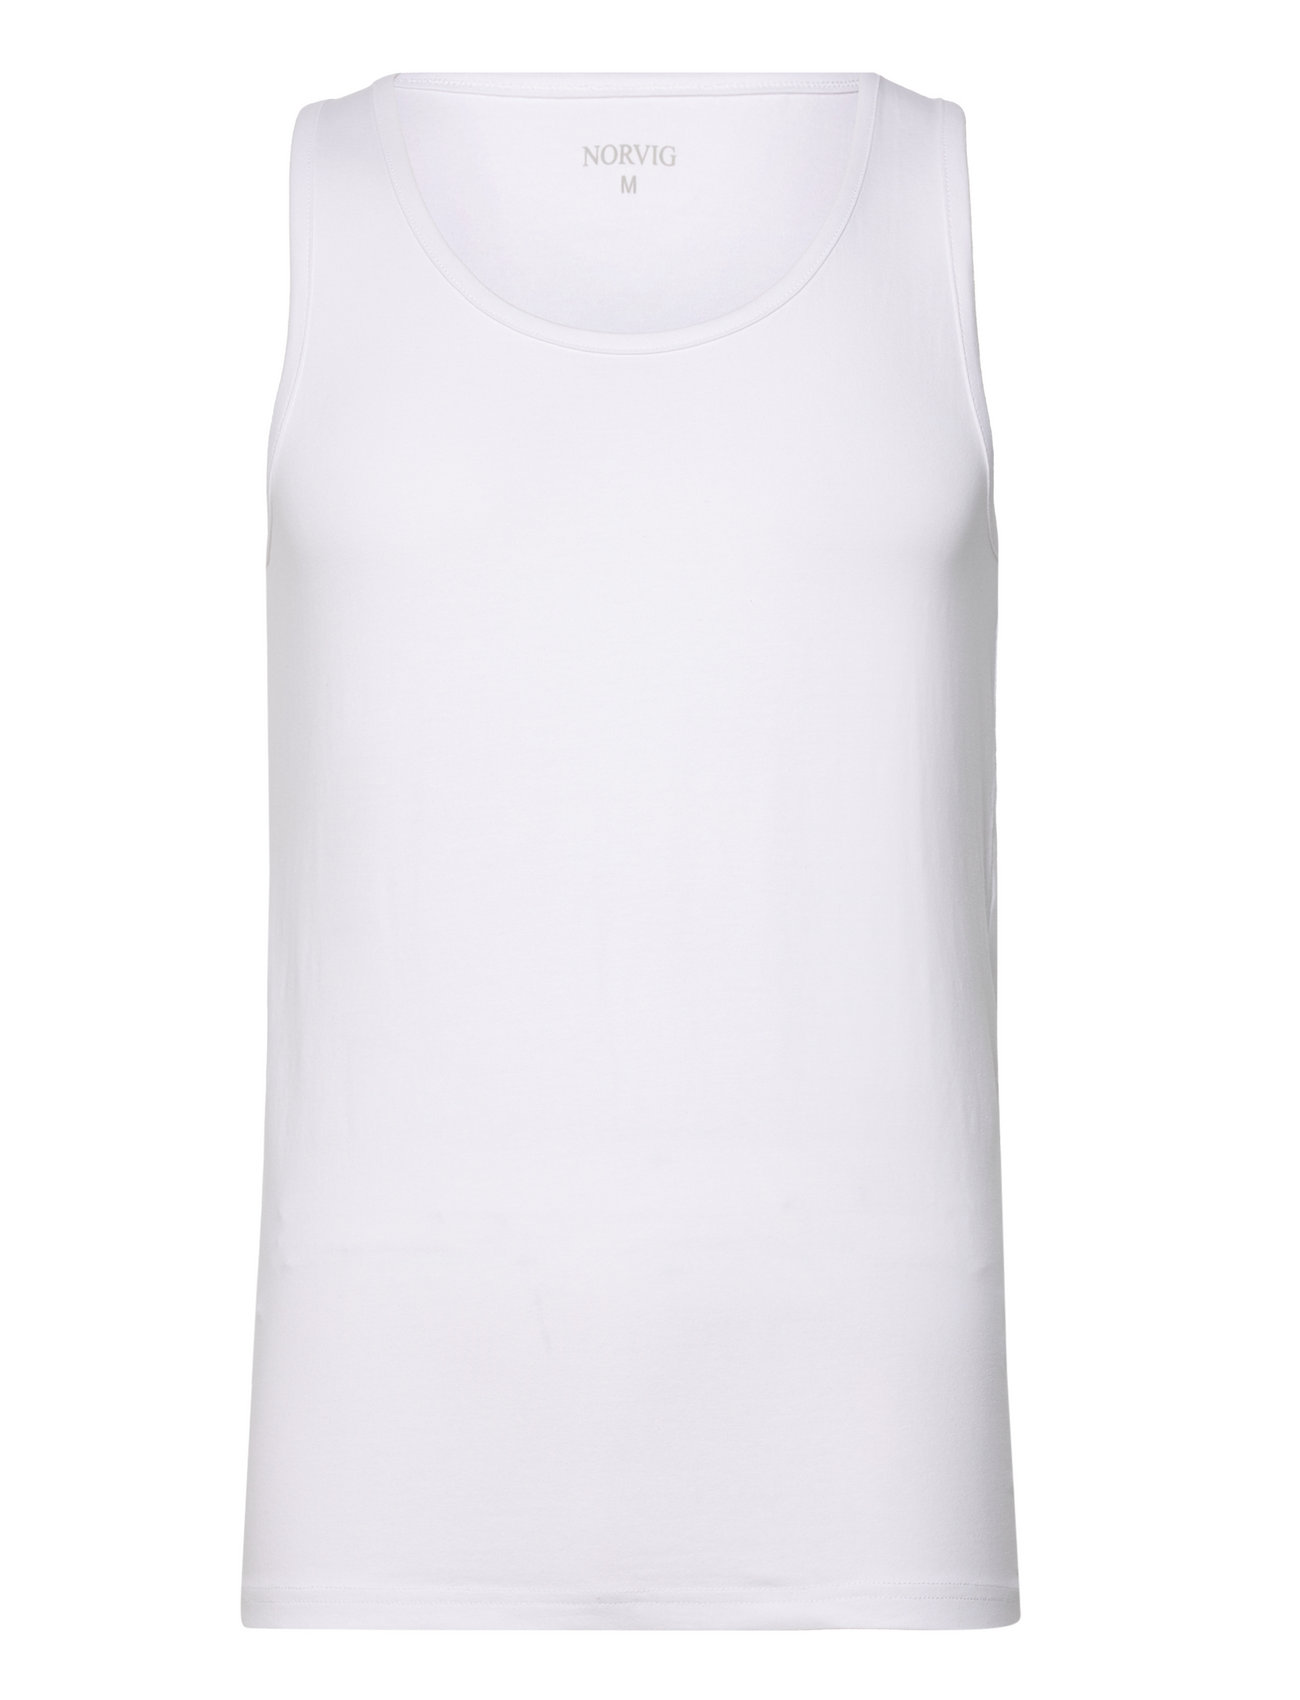 Men's Tank Top, Cotton/Stretch Tops T-shirts Sleeveless White NORVIG